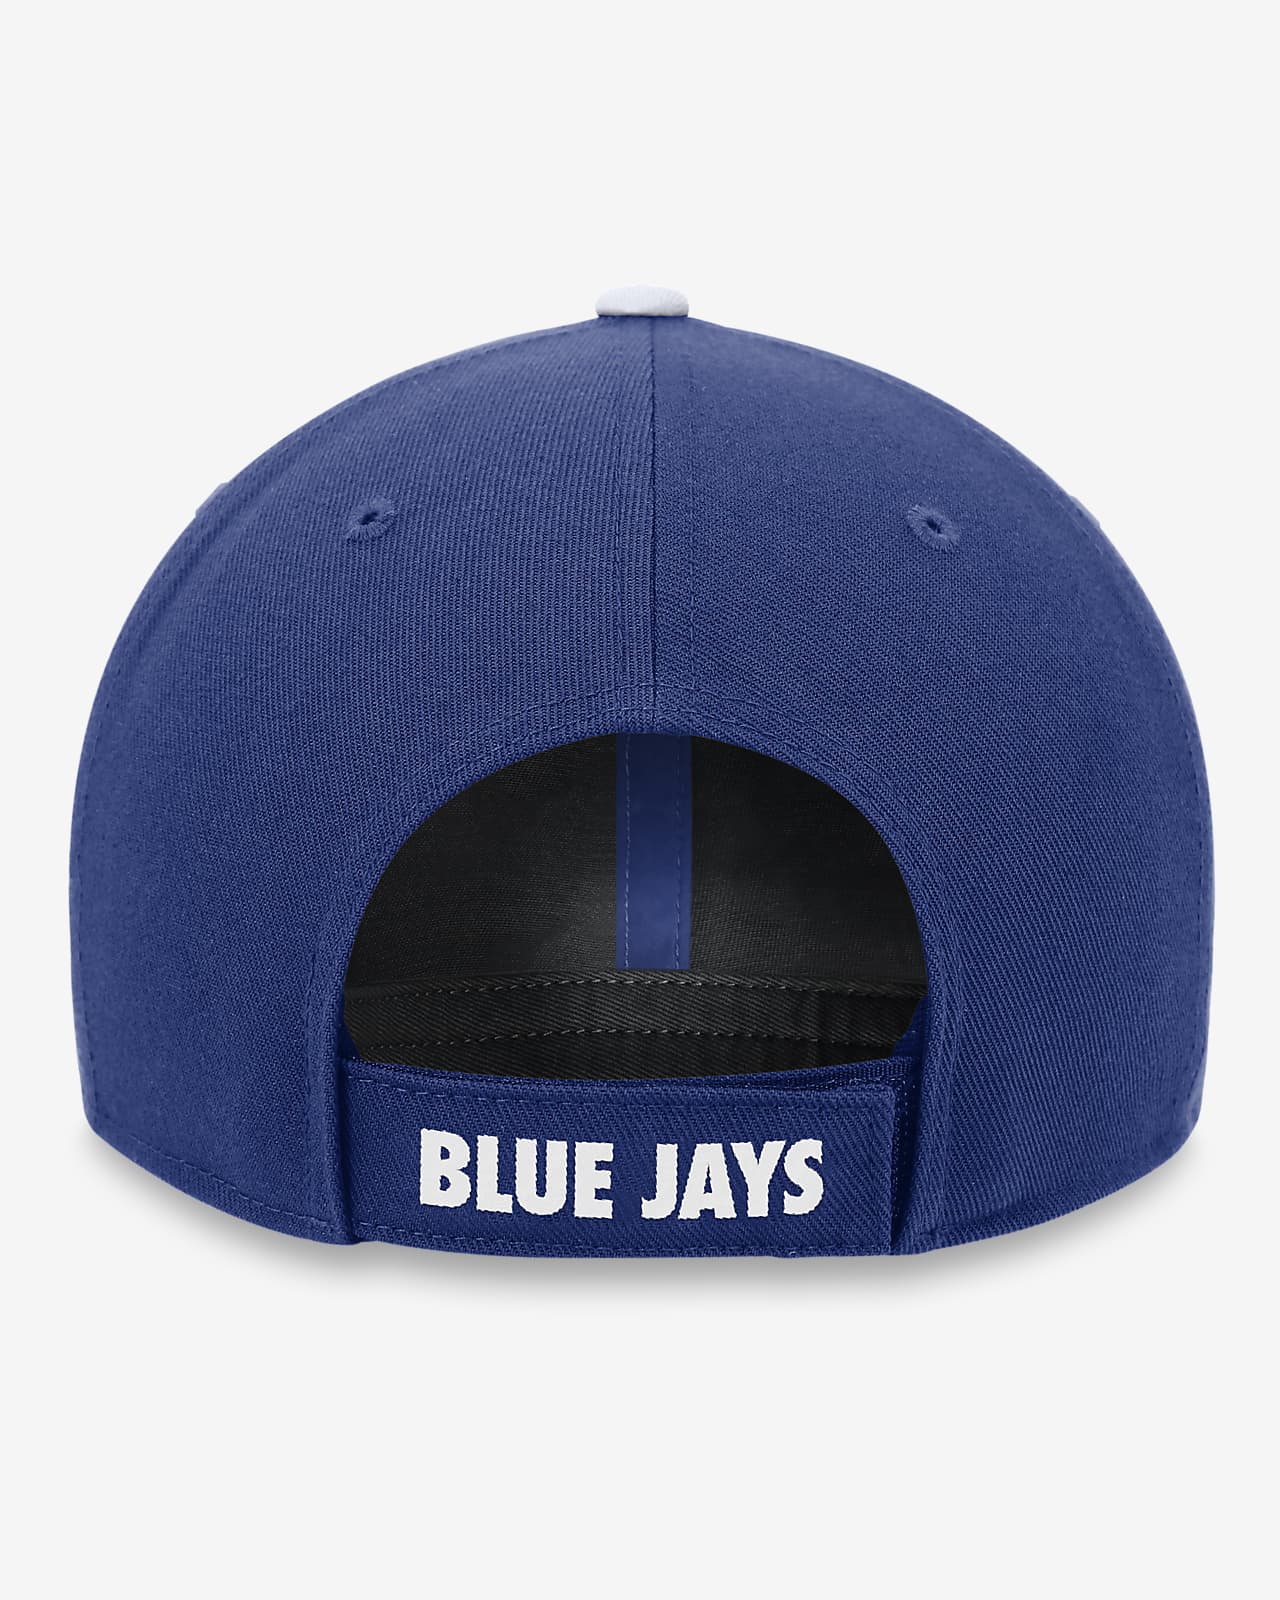 Toronto Blue Jays  Nike accessories, Toronto blue jays, Dri fit